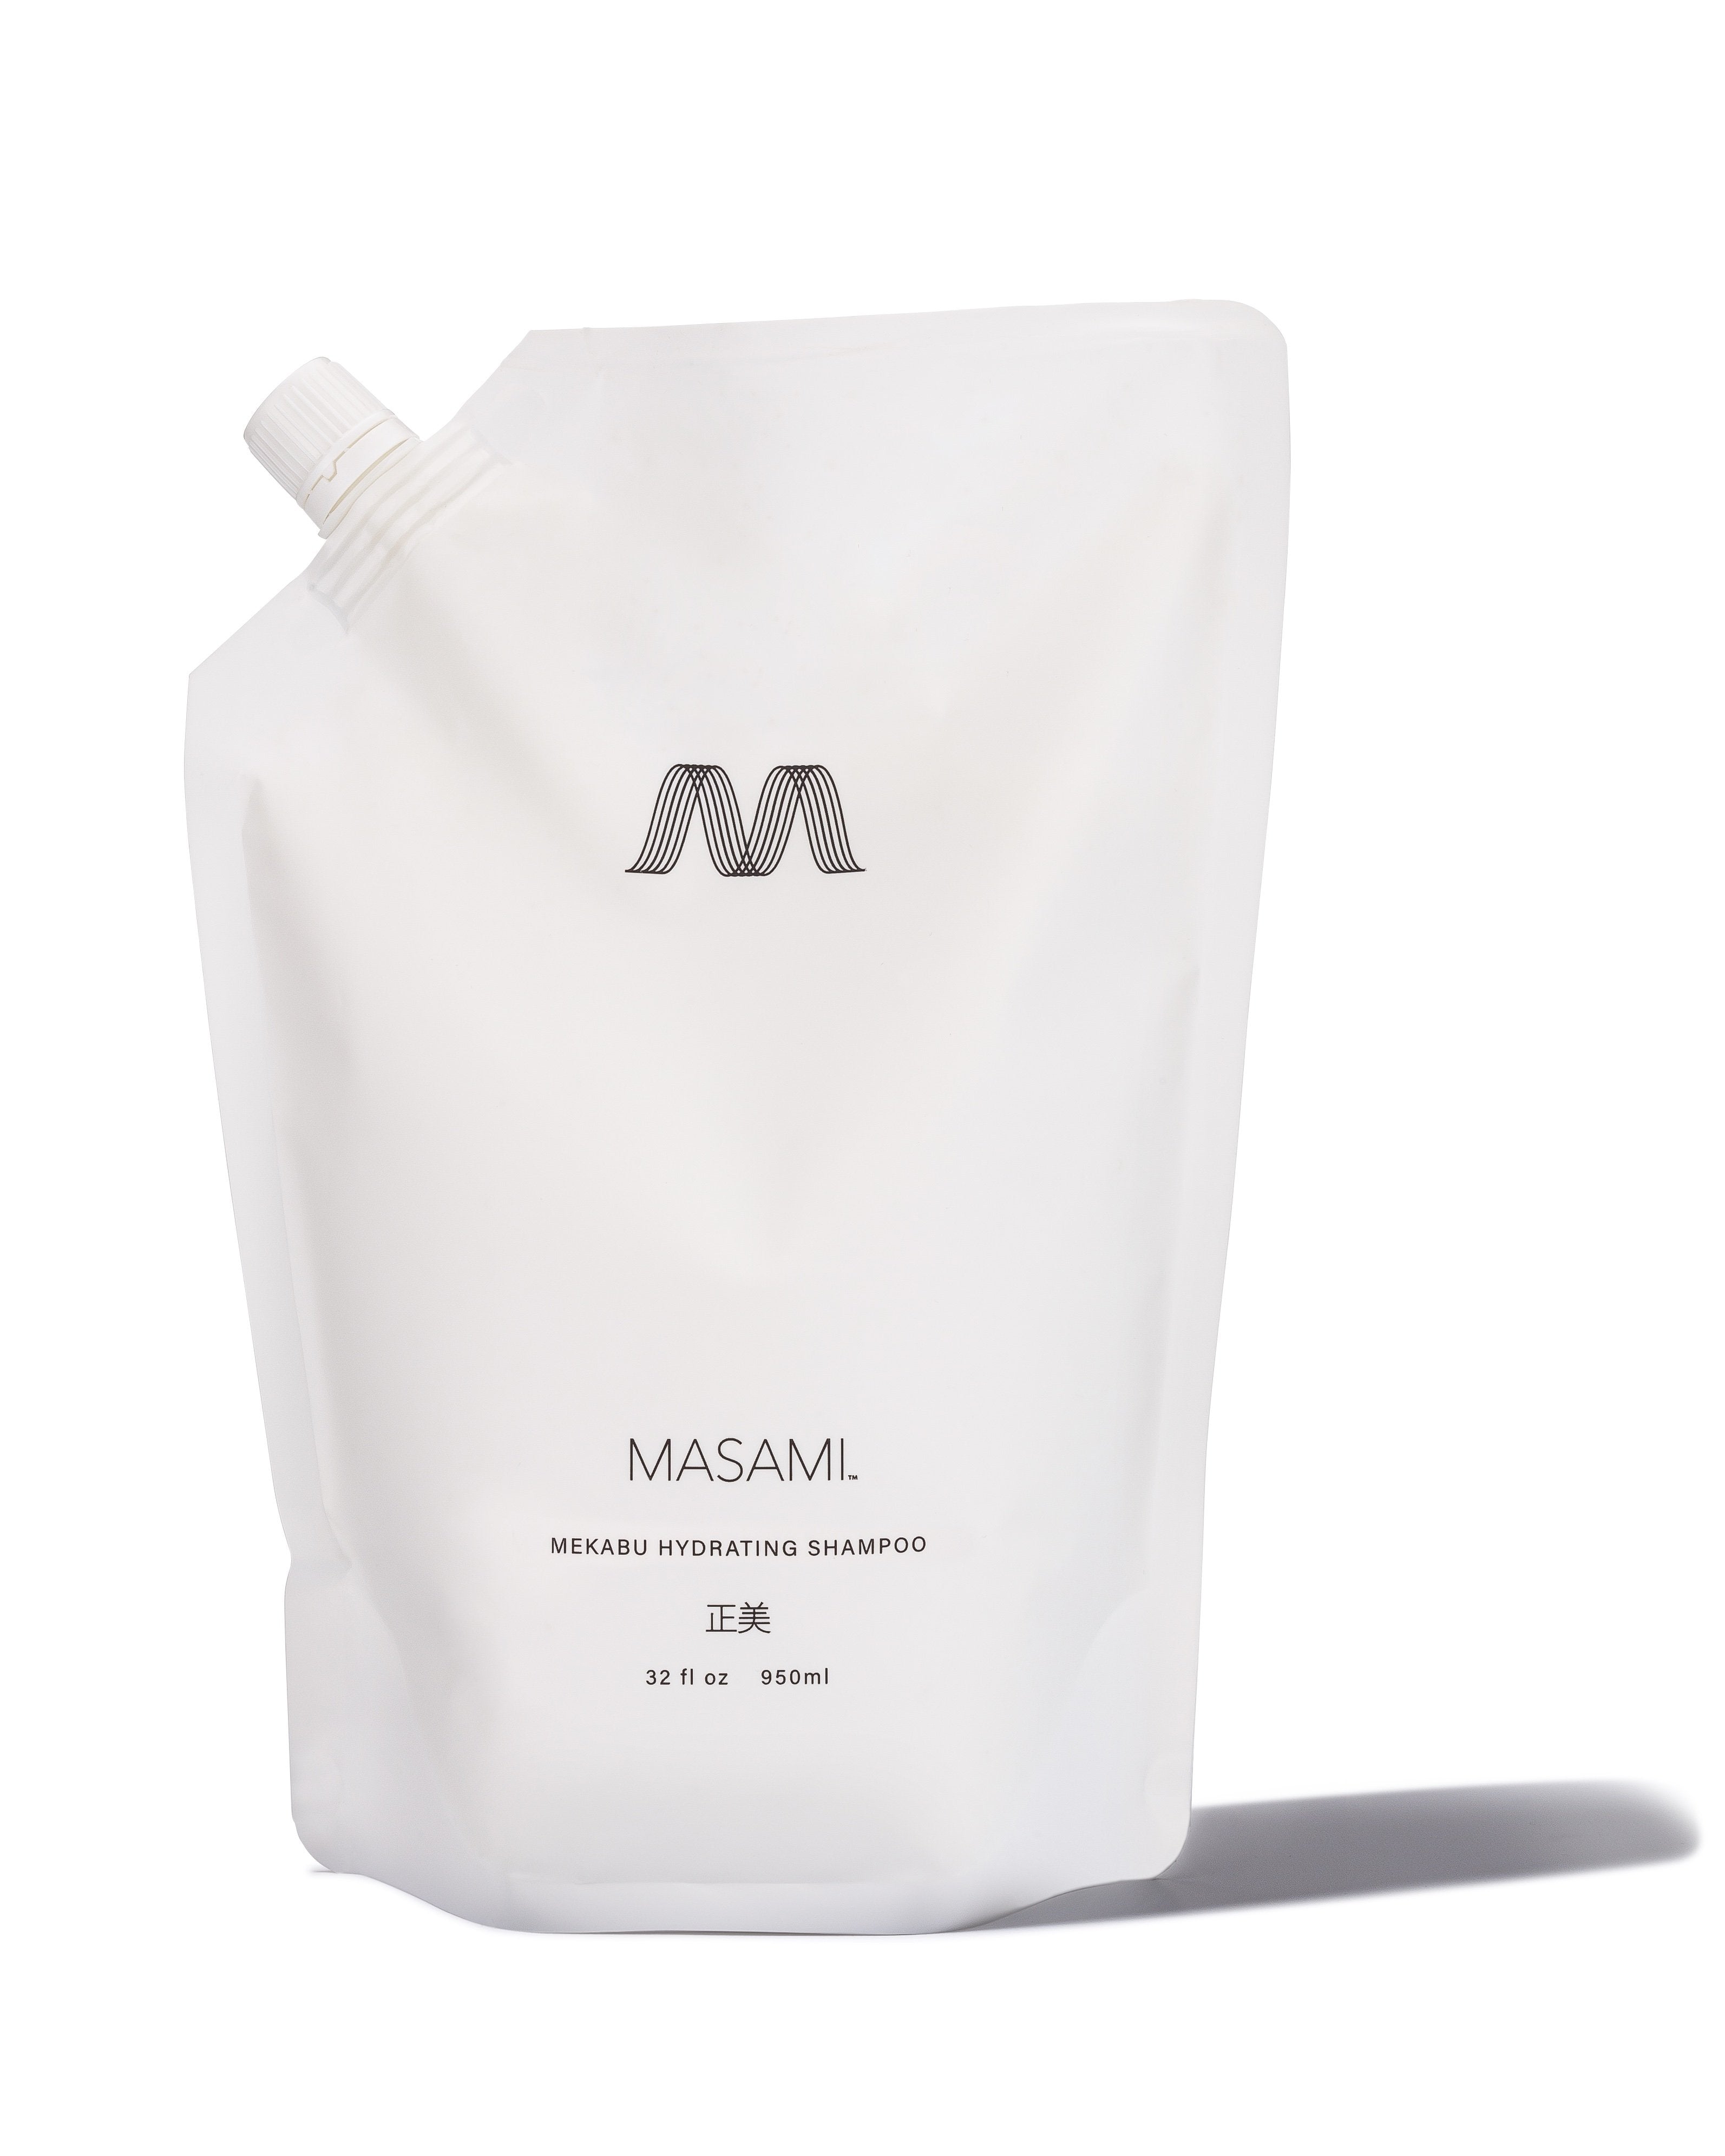 Mekabu Hydrating Shampoo 32 oz Refill Pouch Refills MASAMI 